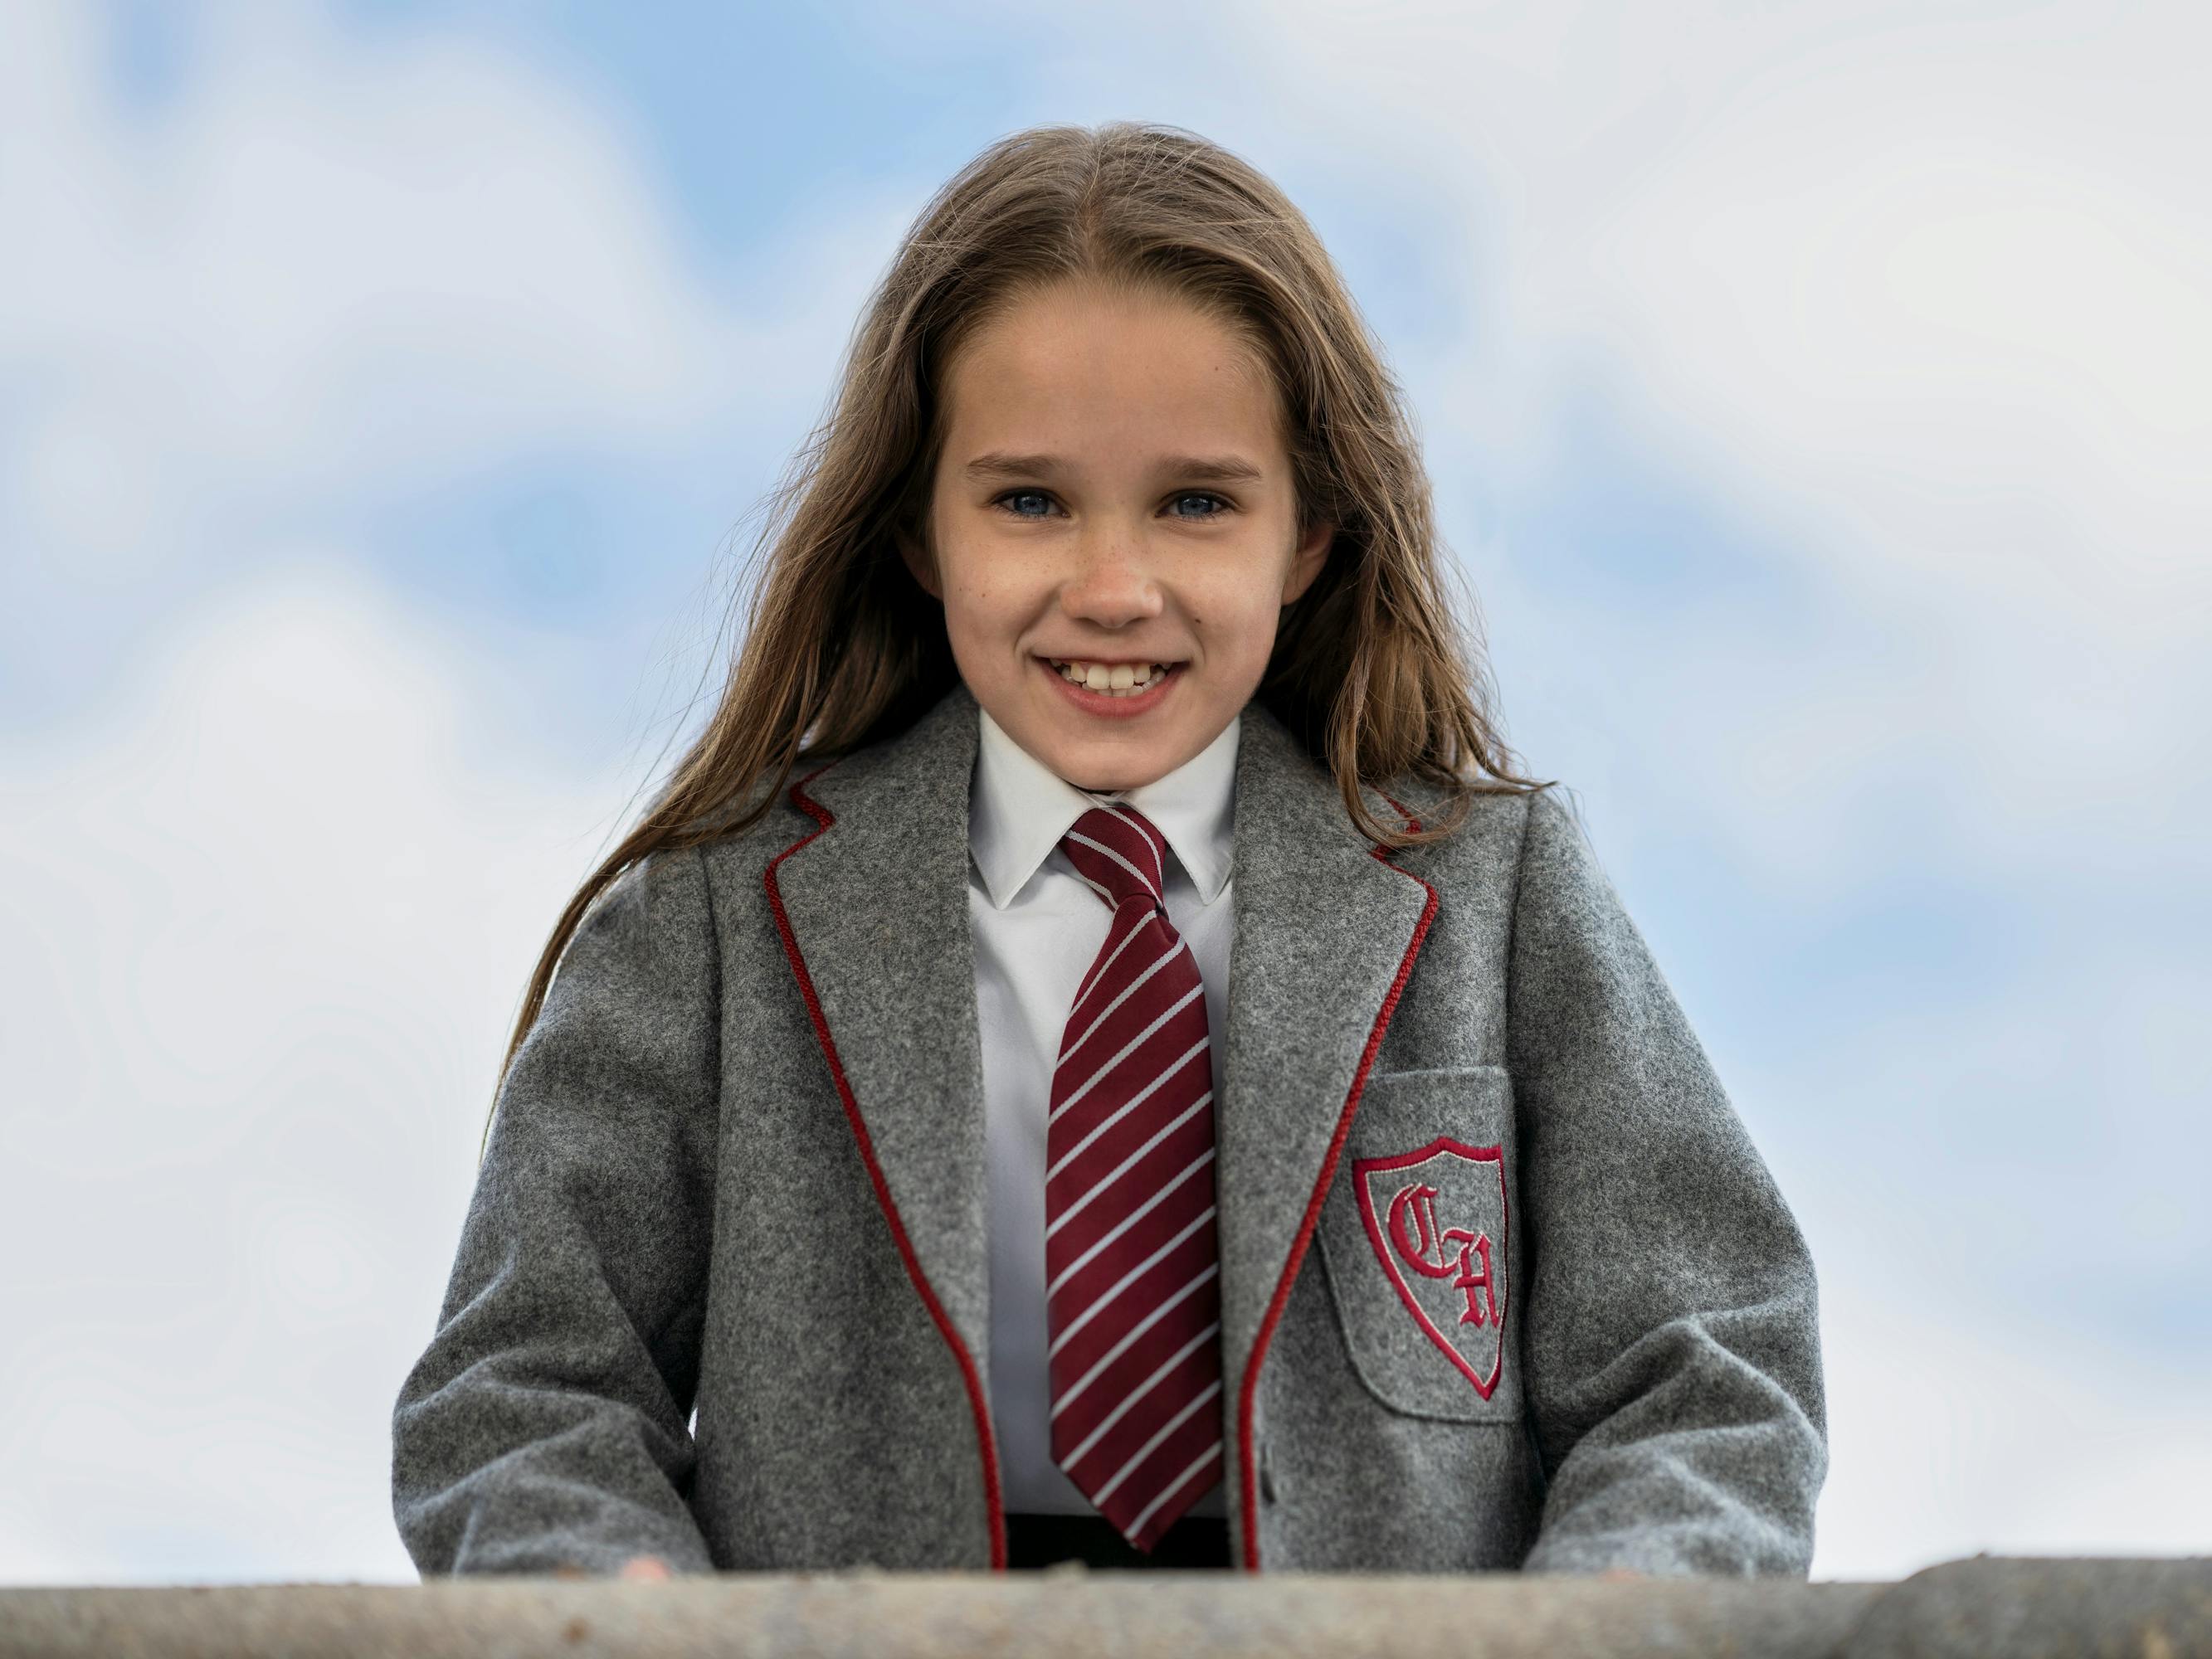 Matilda (Alisha Weir) wears an ADORABLE grey school uniform and tie. 